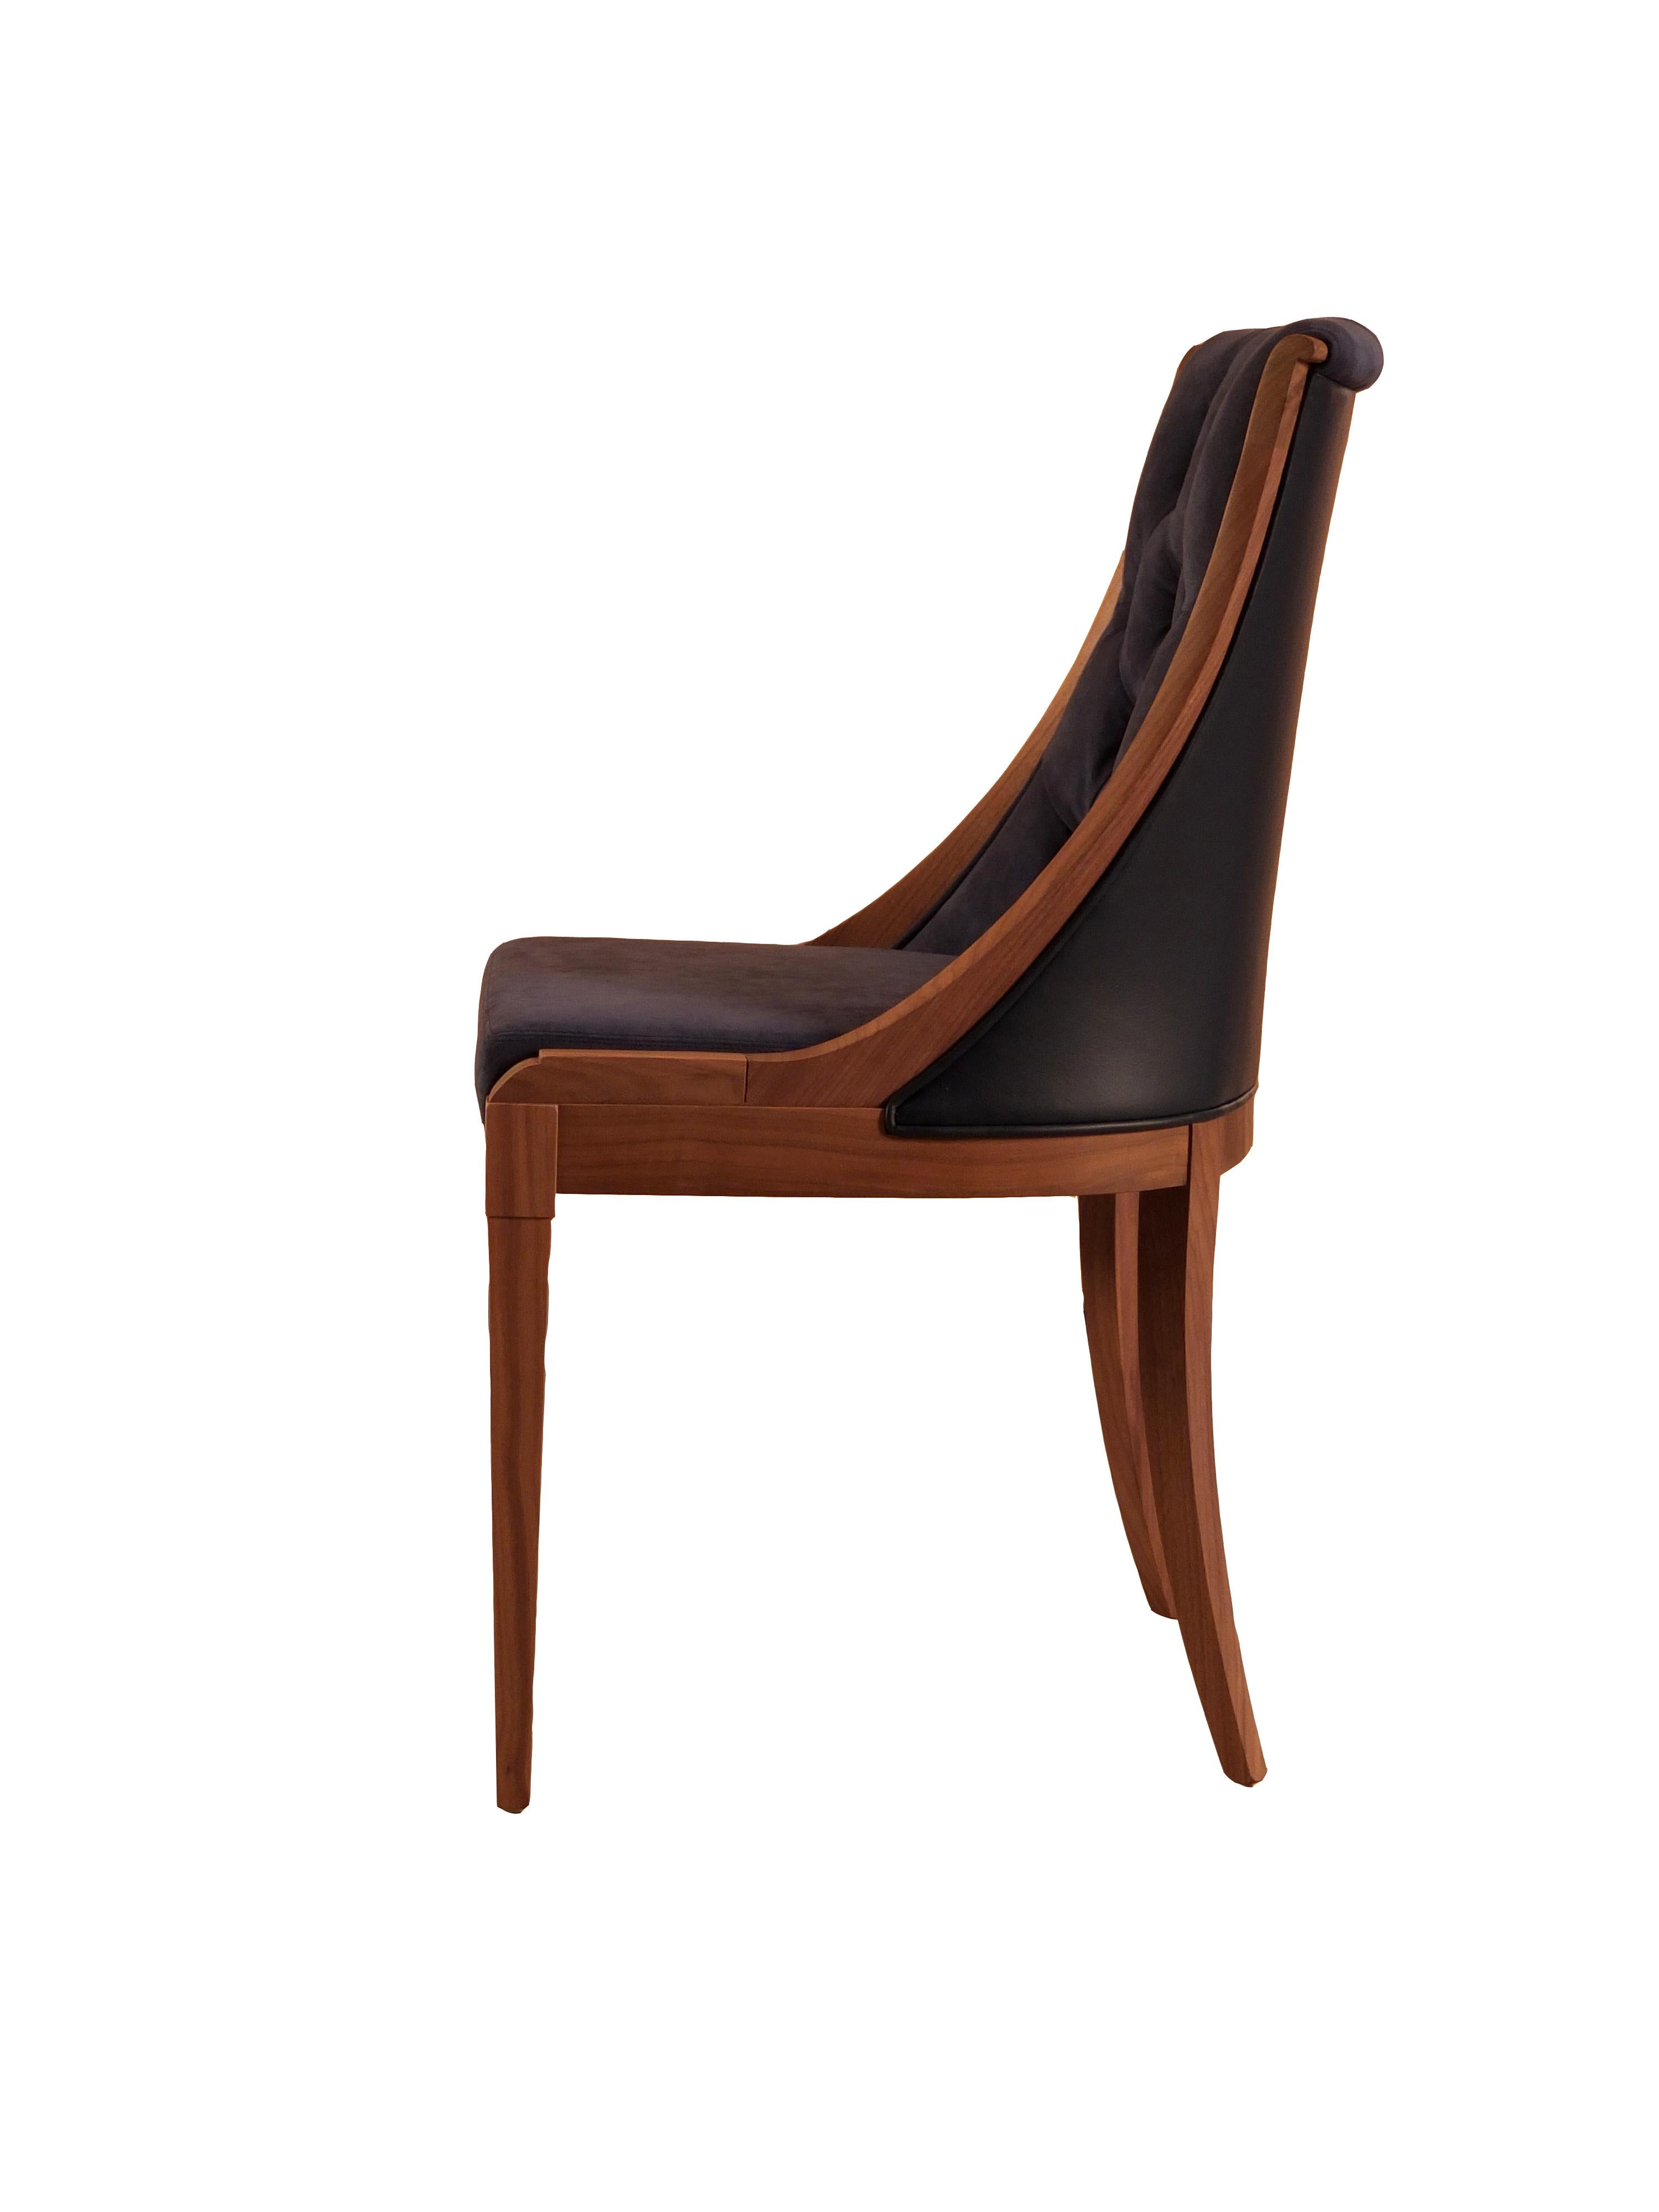 Biedermeier Musa, Upholstered Chair Made of Cherrywood